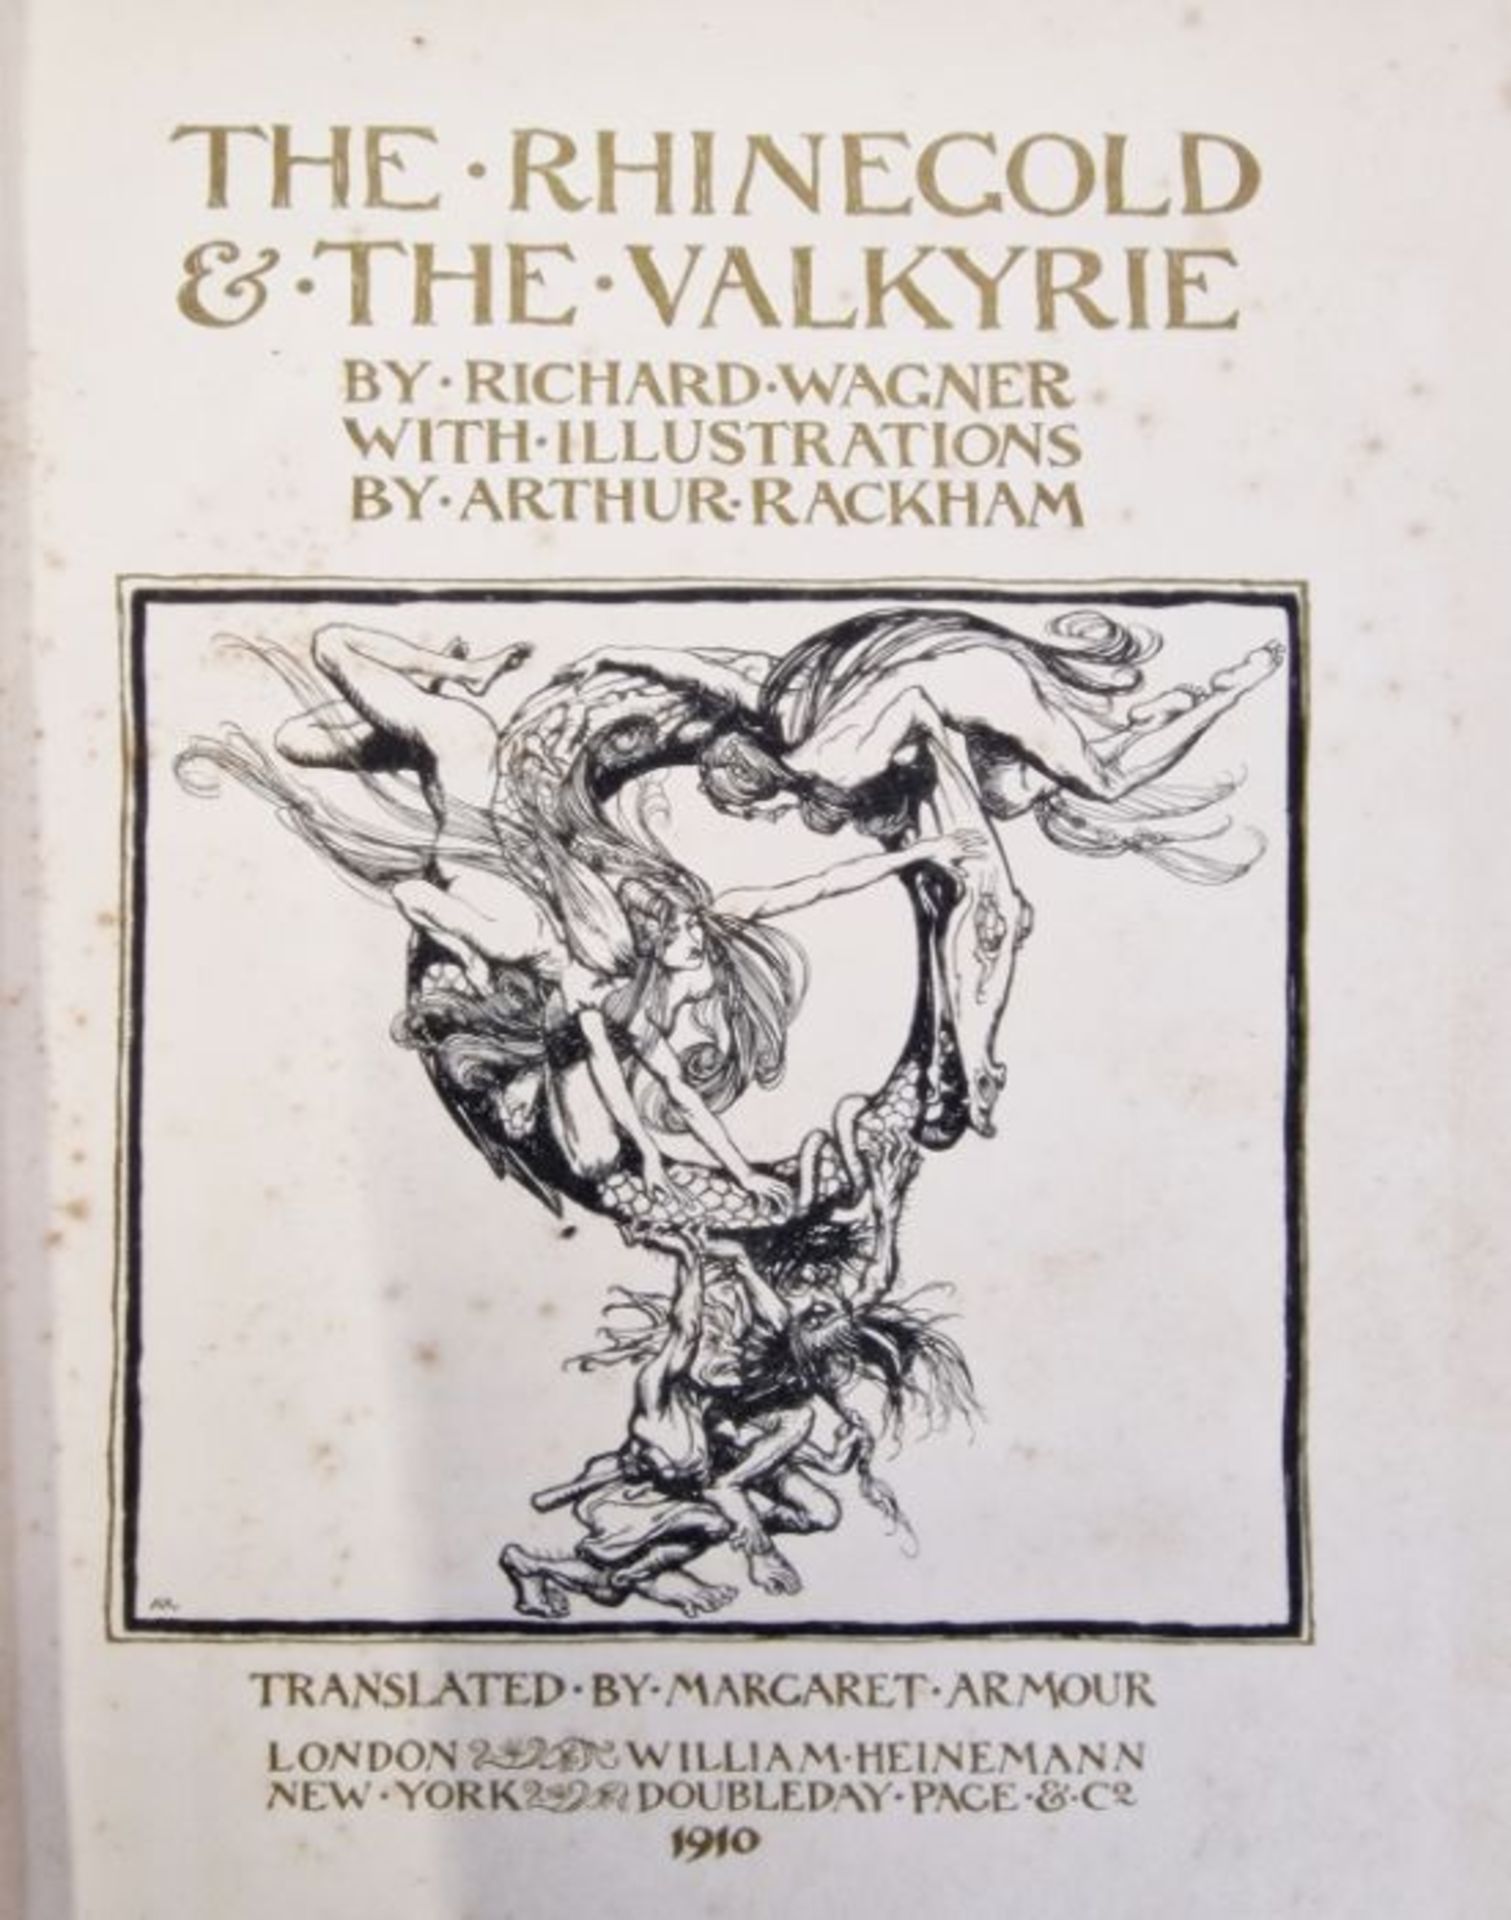 Rackham Arthur ( ills.) ' The Rhinegold & the Valkyrie'  William Heinemann 1910 - col plates - Image 27 of 32